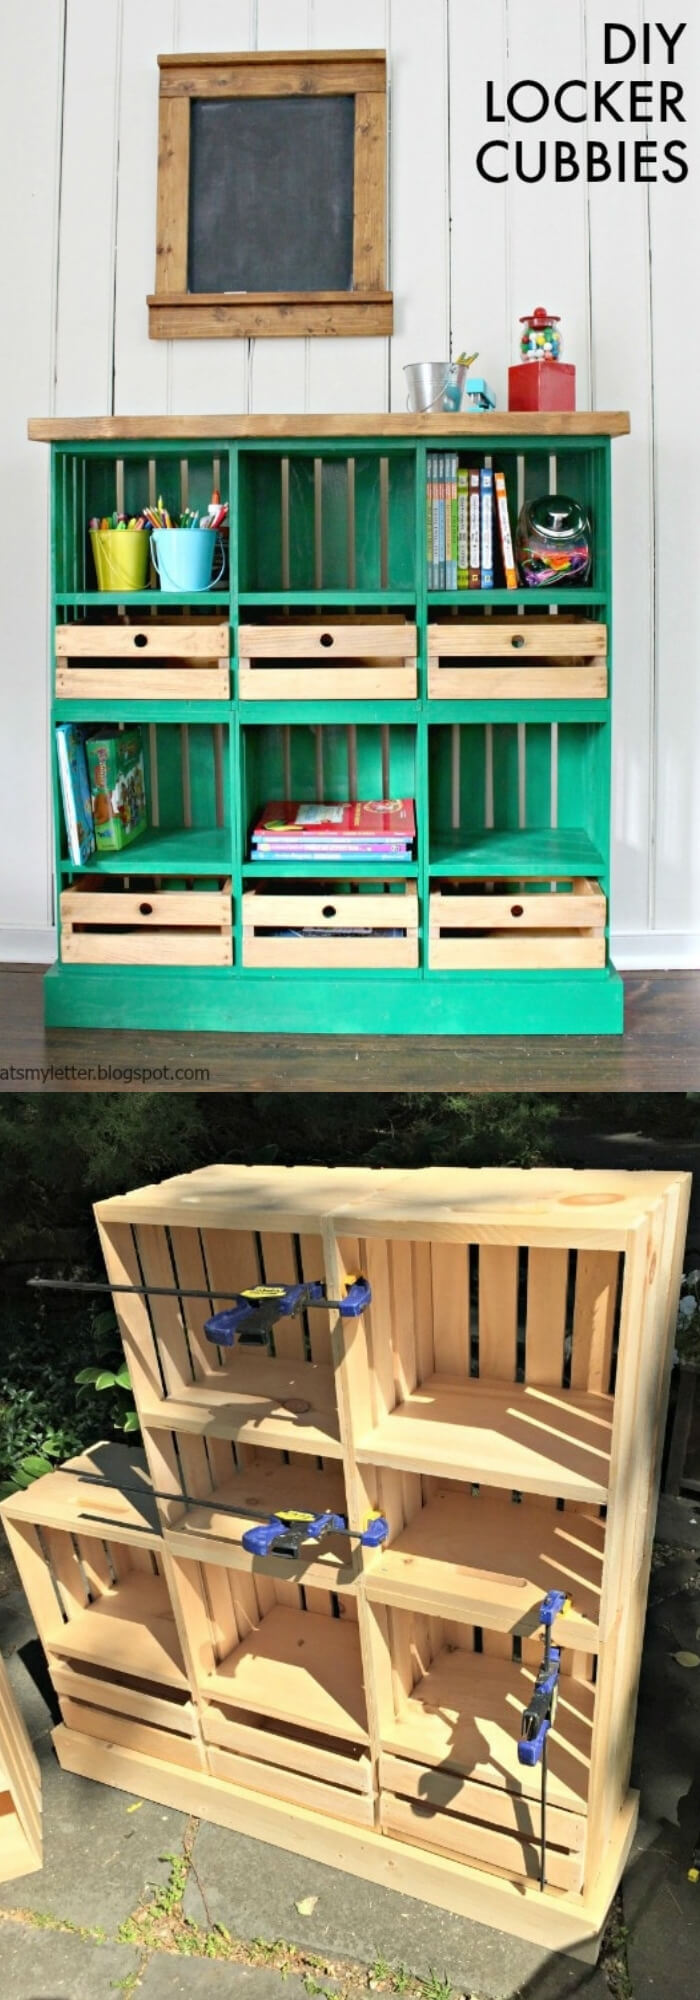 Crate Locker Cubbies | Best DIY Wood Crate Projects & Ideas